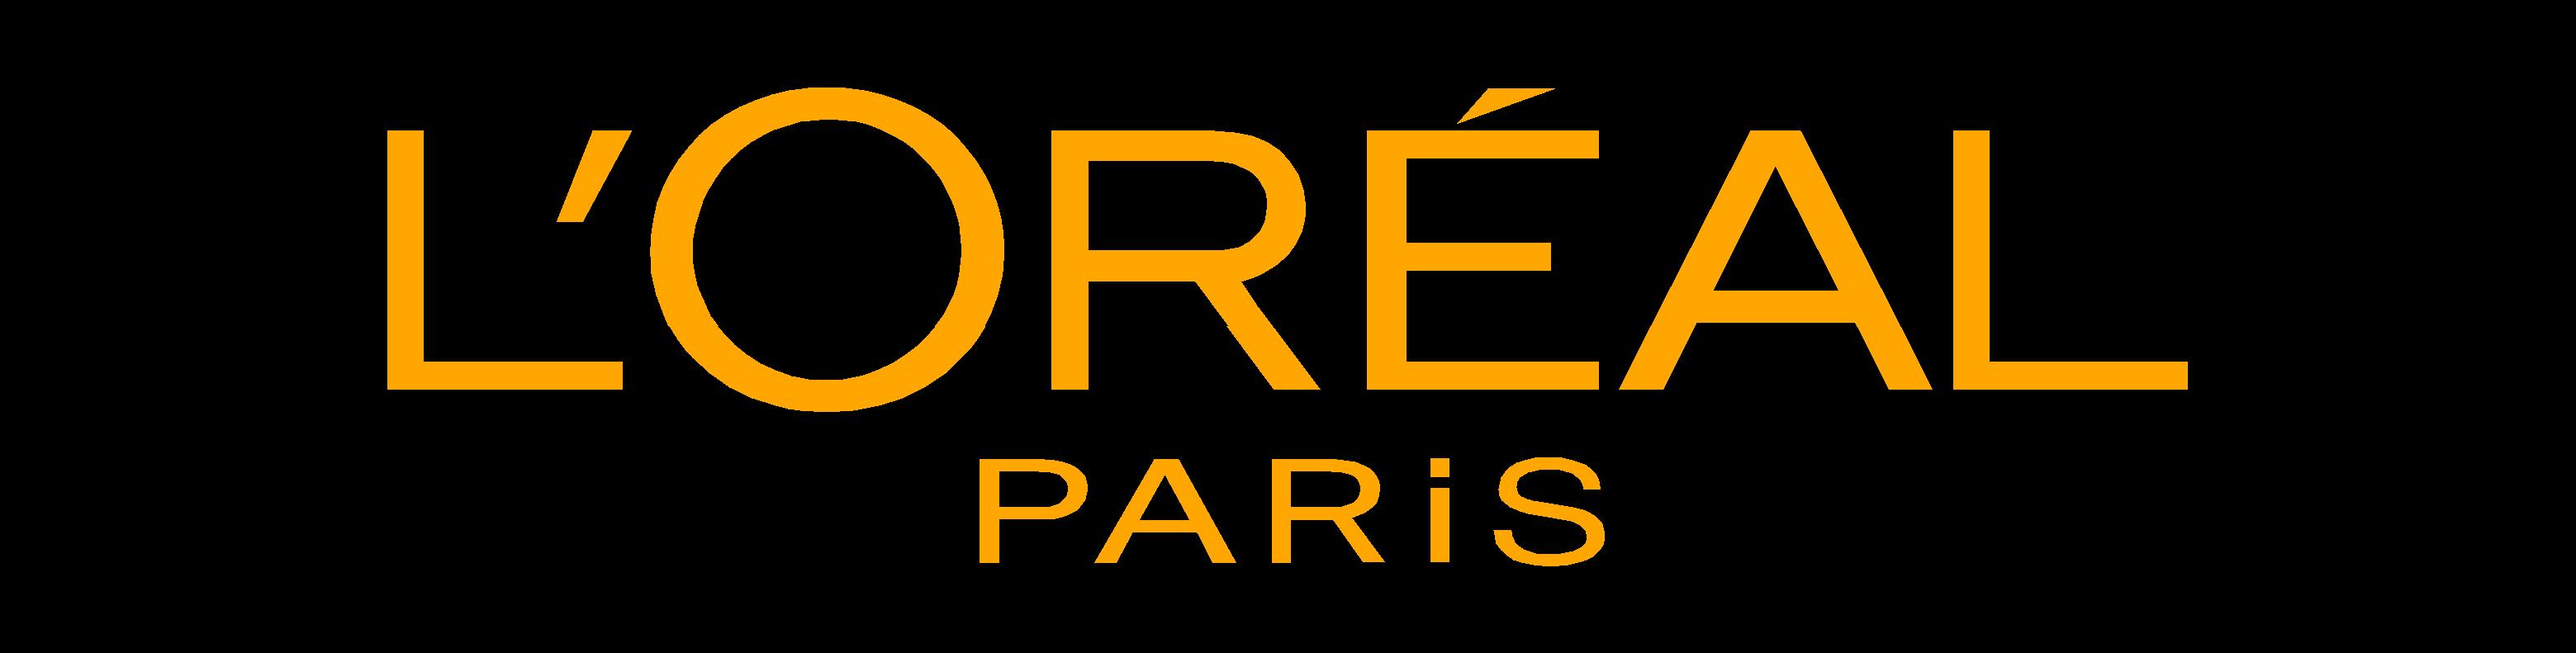 L'Oreal Paris Logo